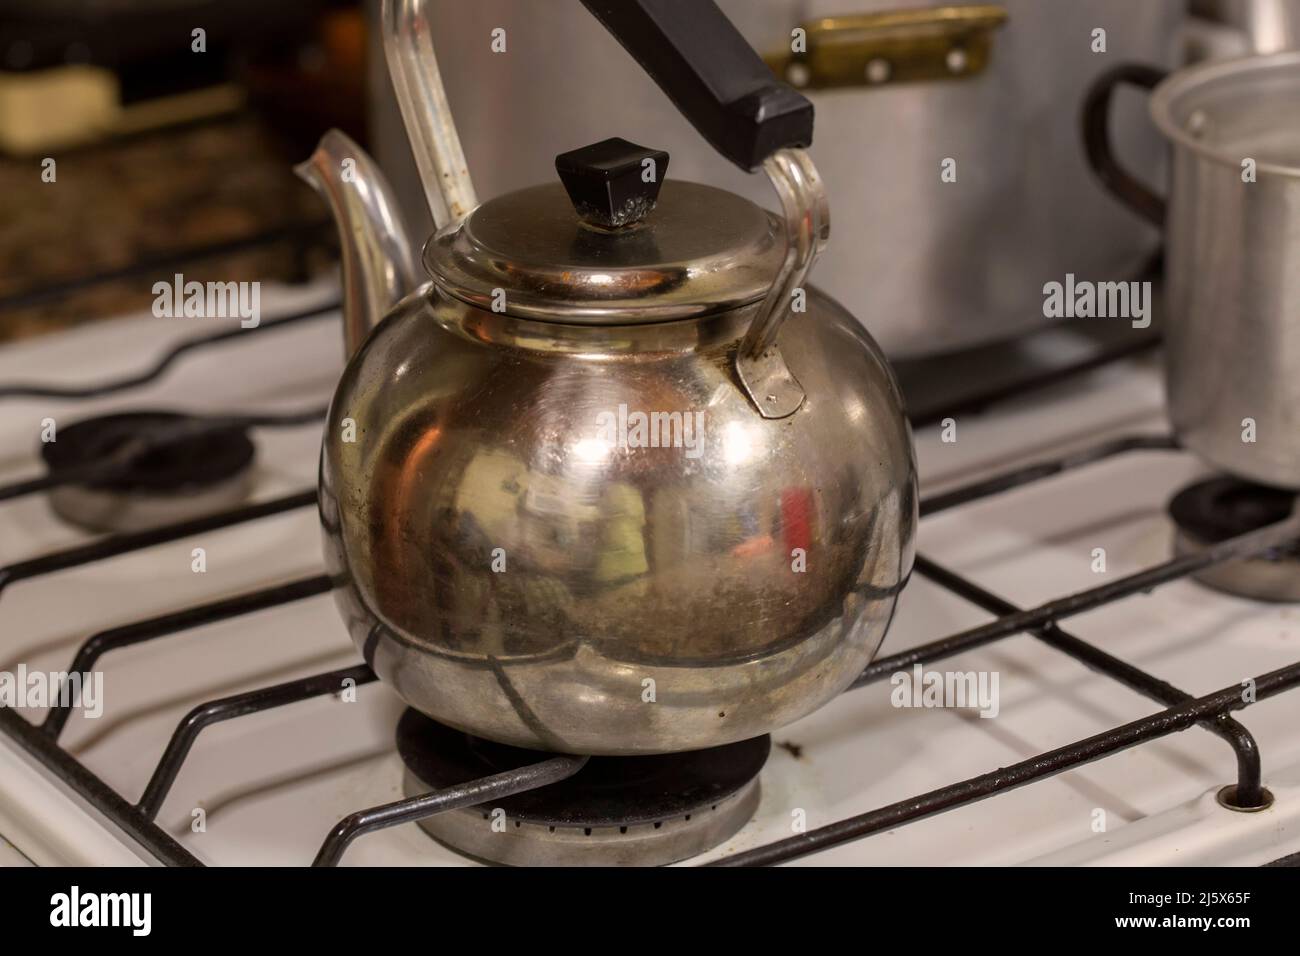 https://c8.alamy.com/comp/2J5X65F/photograph-of-old-metal-kettle-on-gas-stove-2J5X65F.jpg